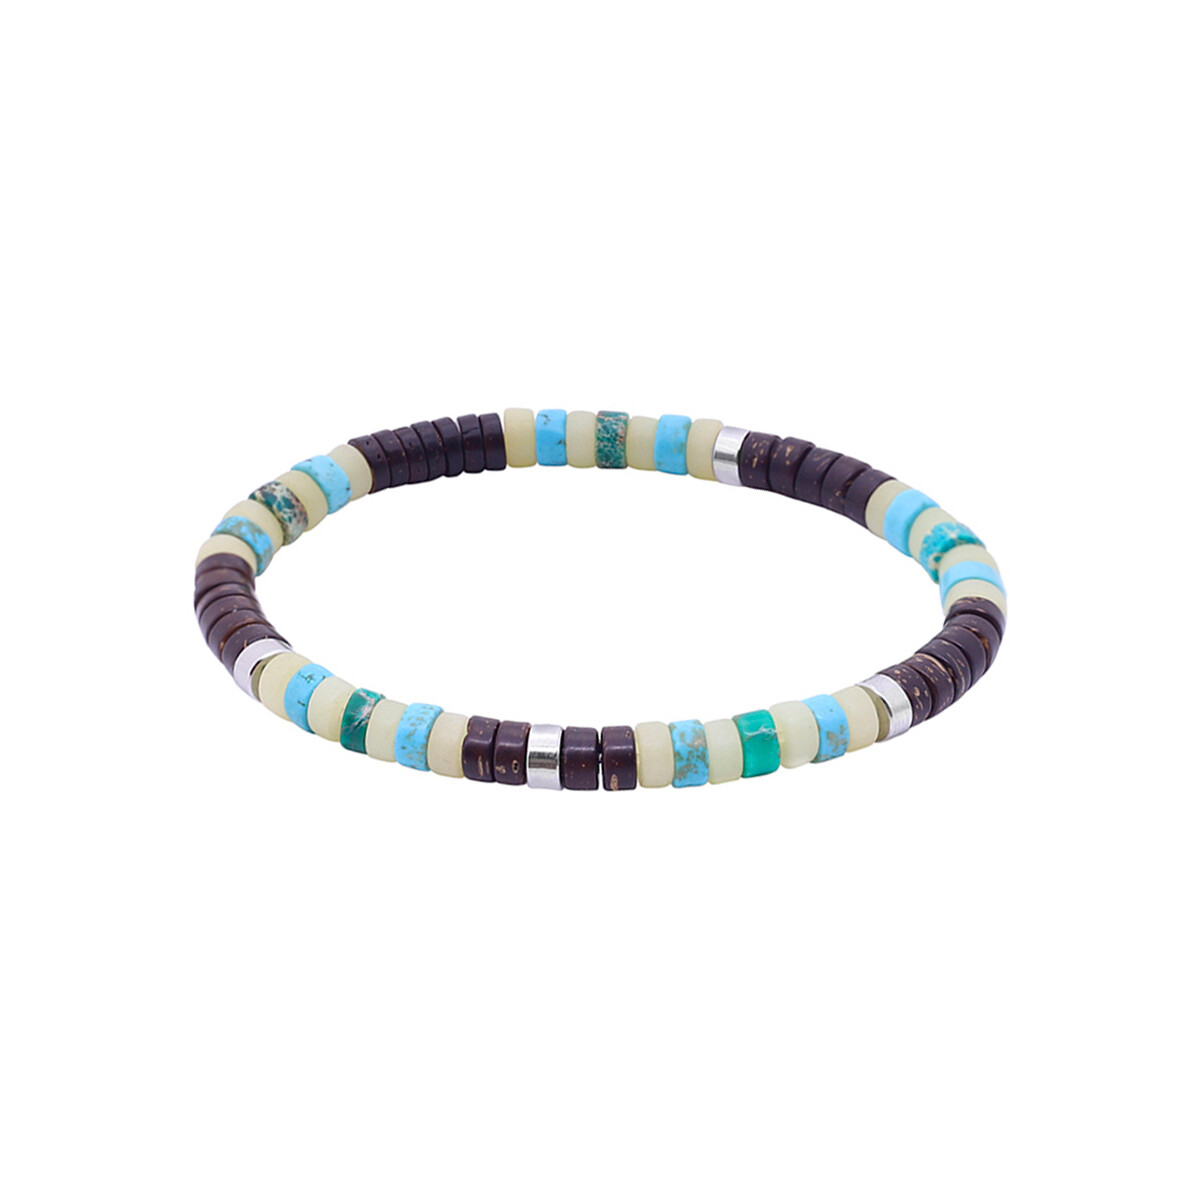 Montres & Bijoux Bracelets Sixtystones Bracelet Perles Heishi Turquoise Jaspe -Large-20cm Multicolore